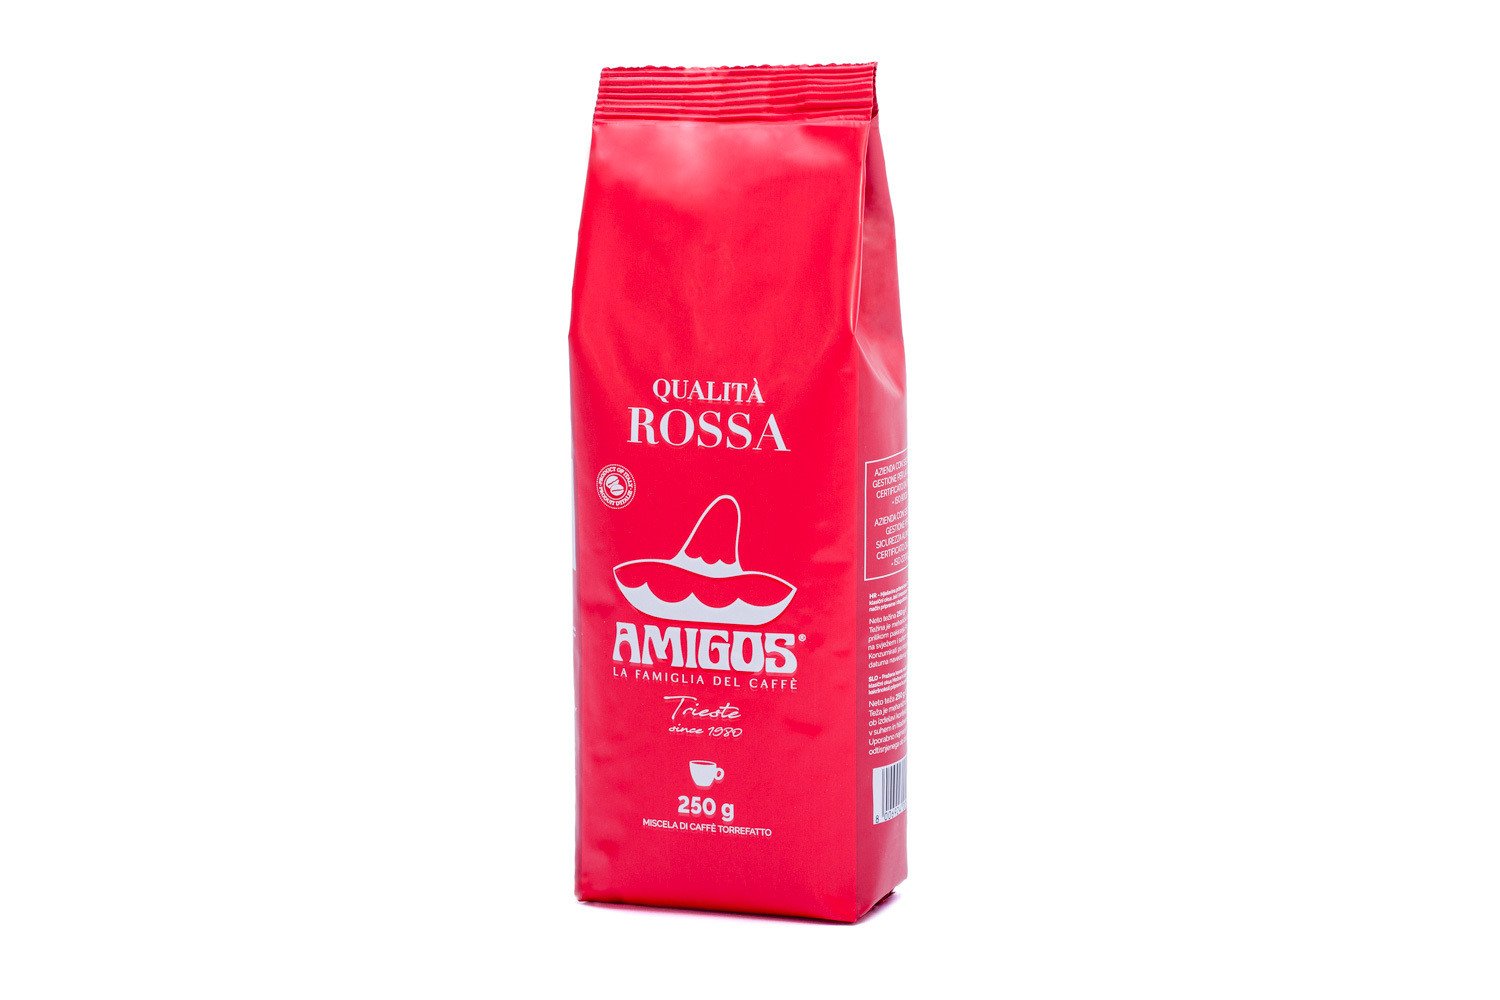 Qualità Rossa ground coffee